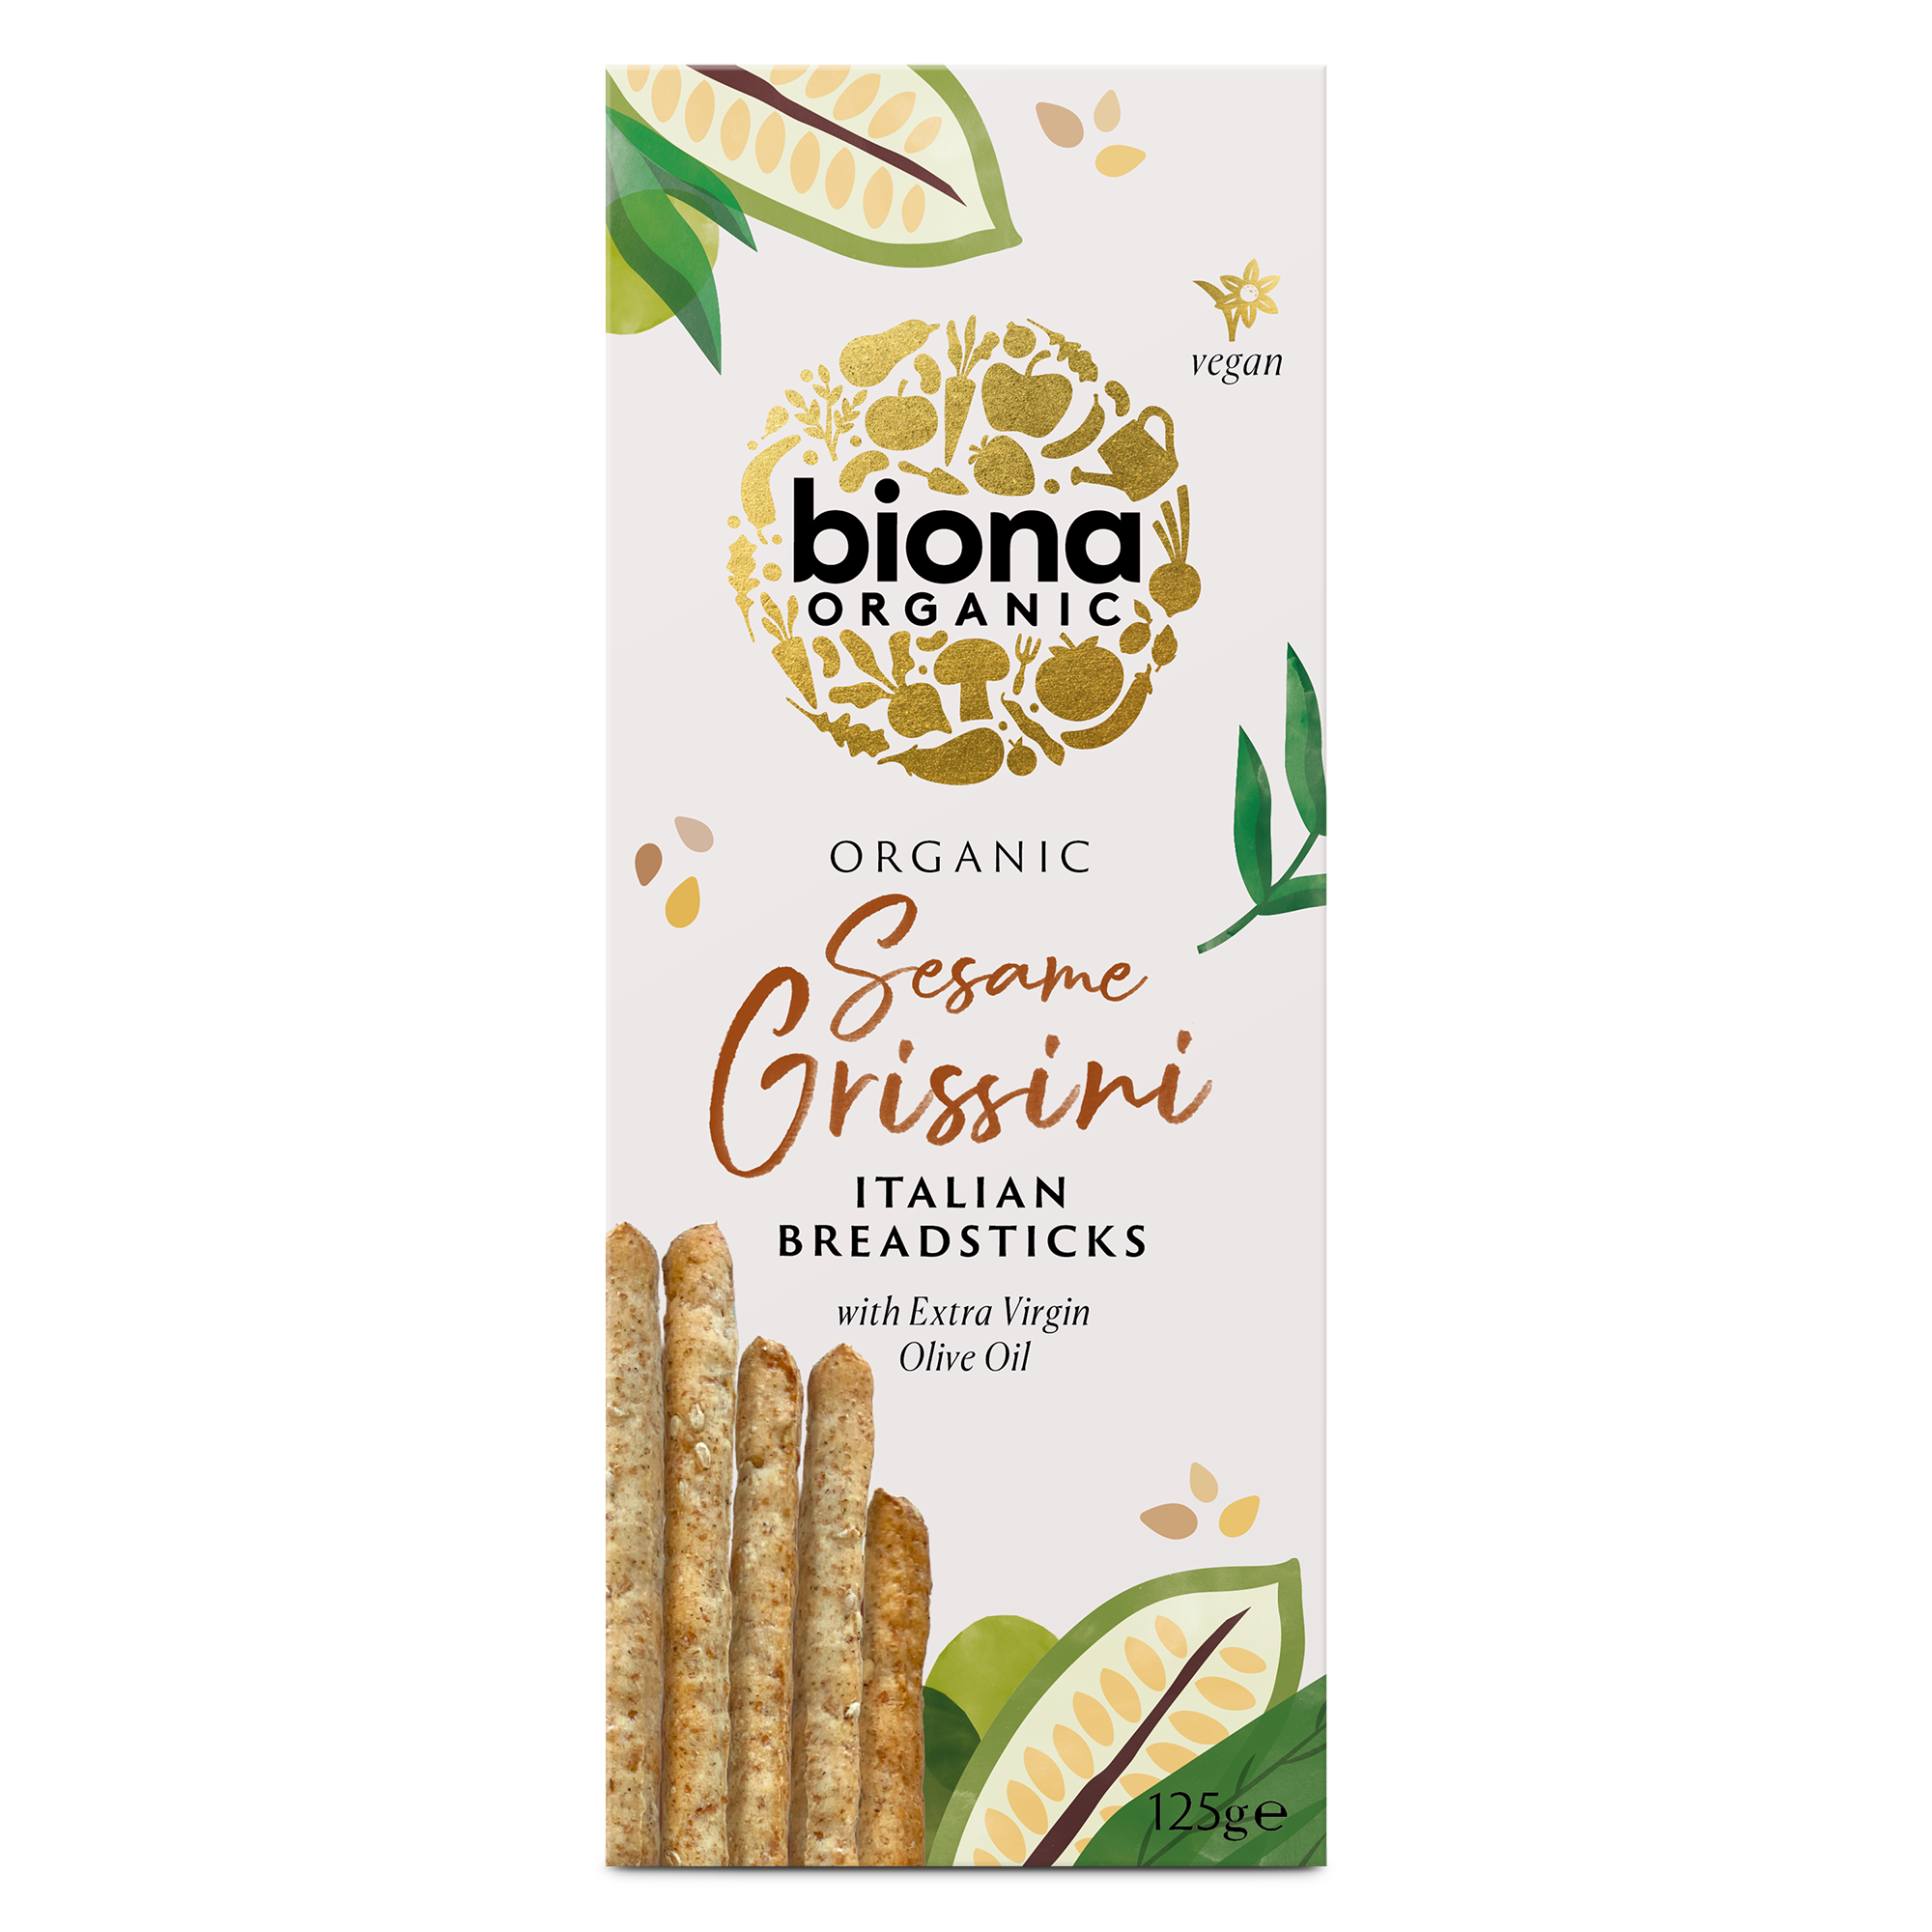 Biona Organic Sesame Grissini Italian Breadsticks (125g)